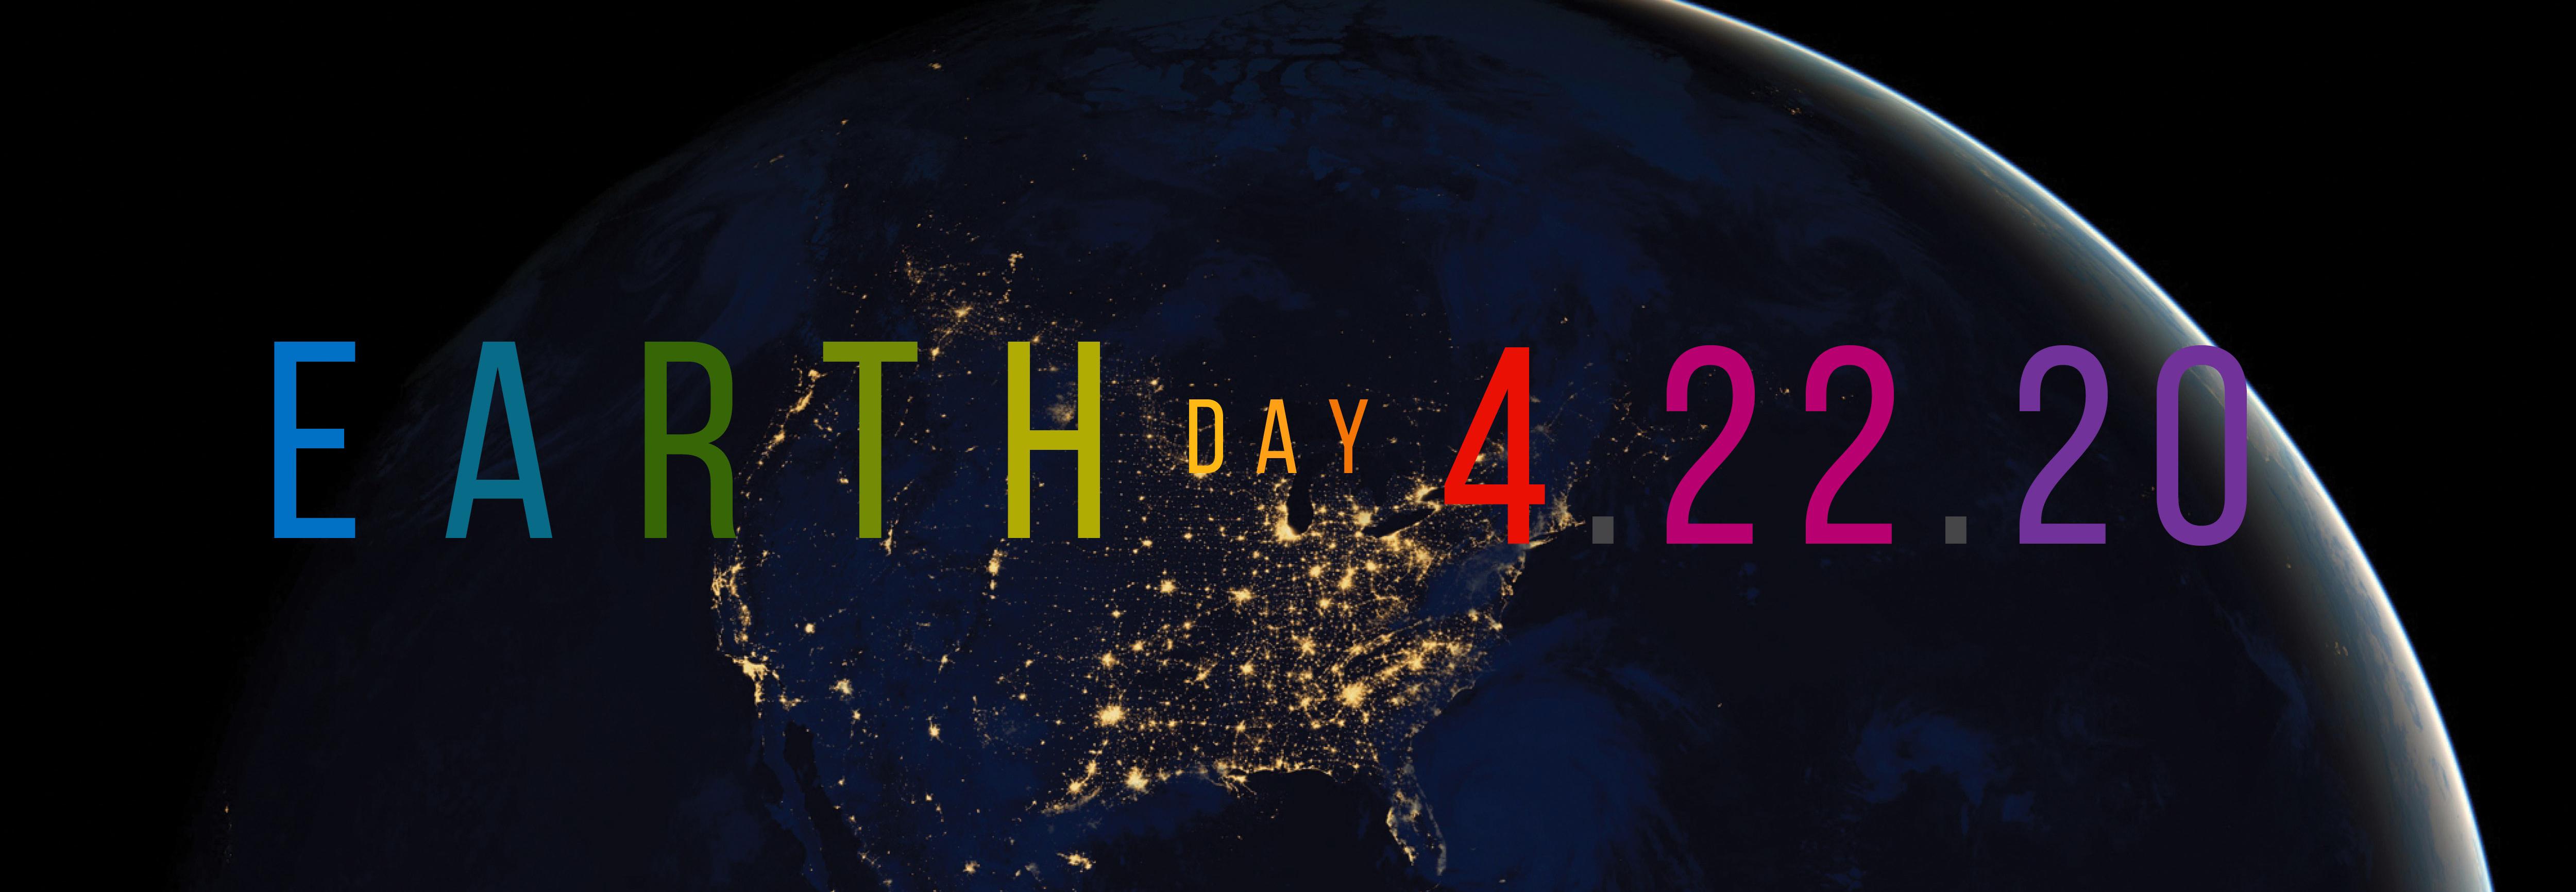 Earth Day 4.22.20